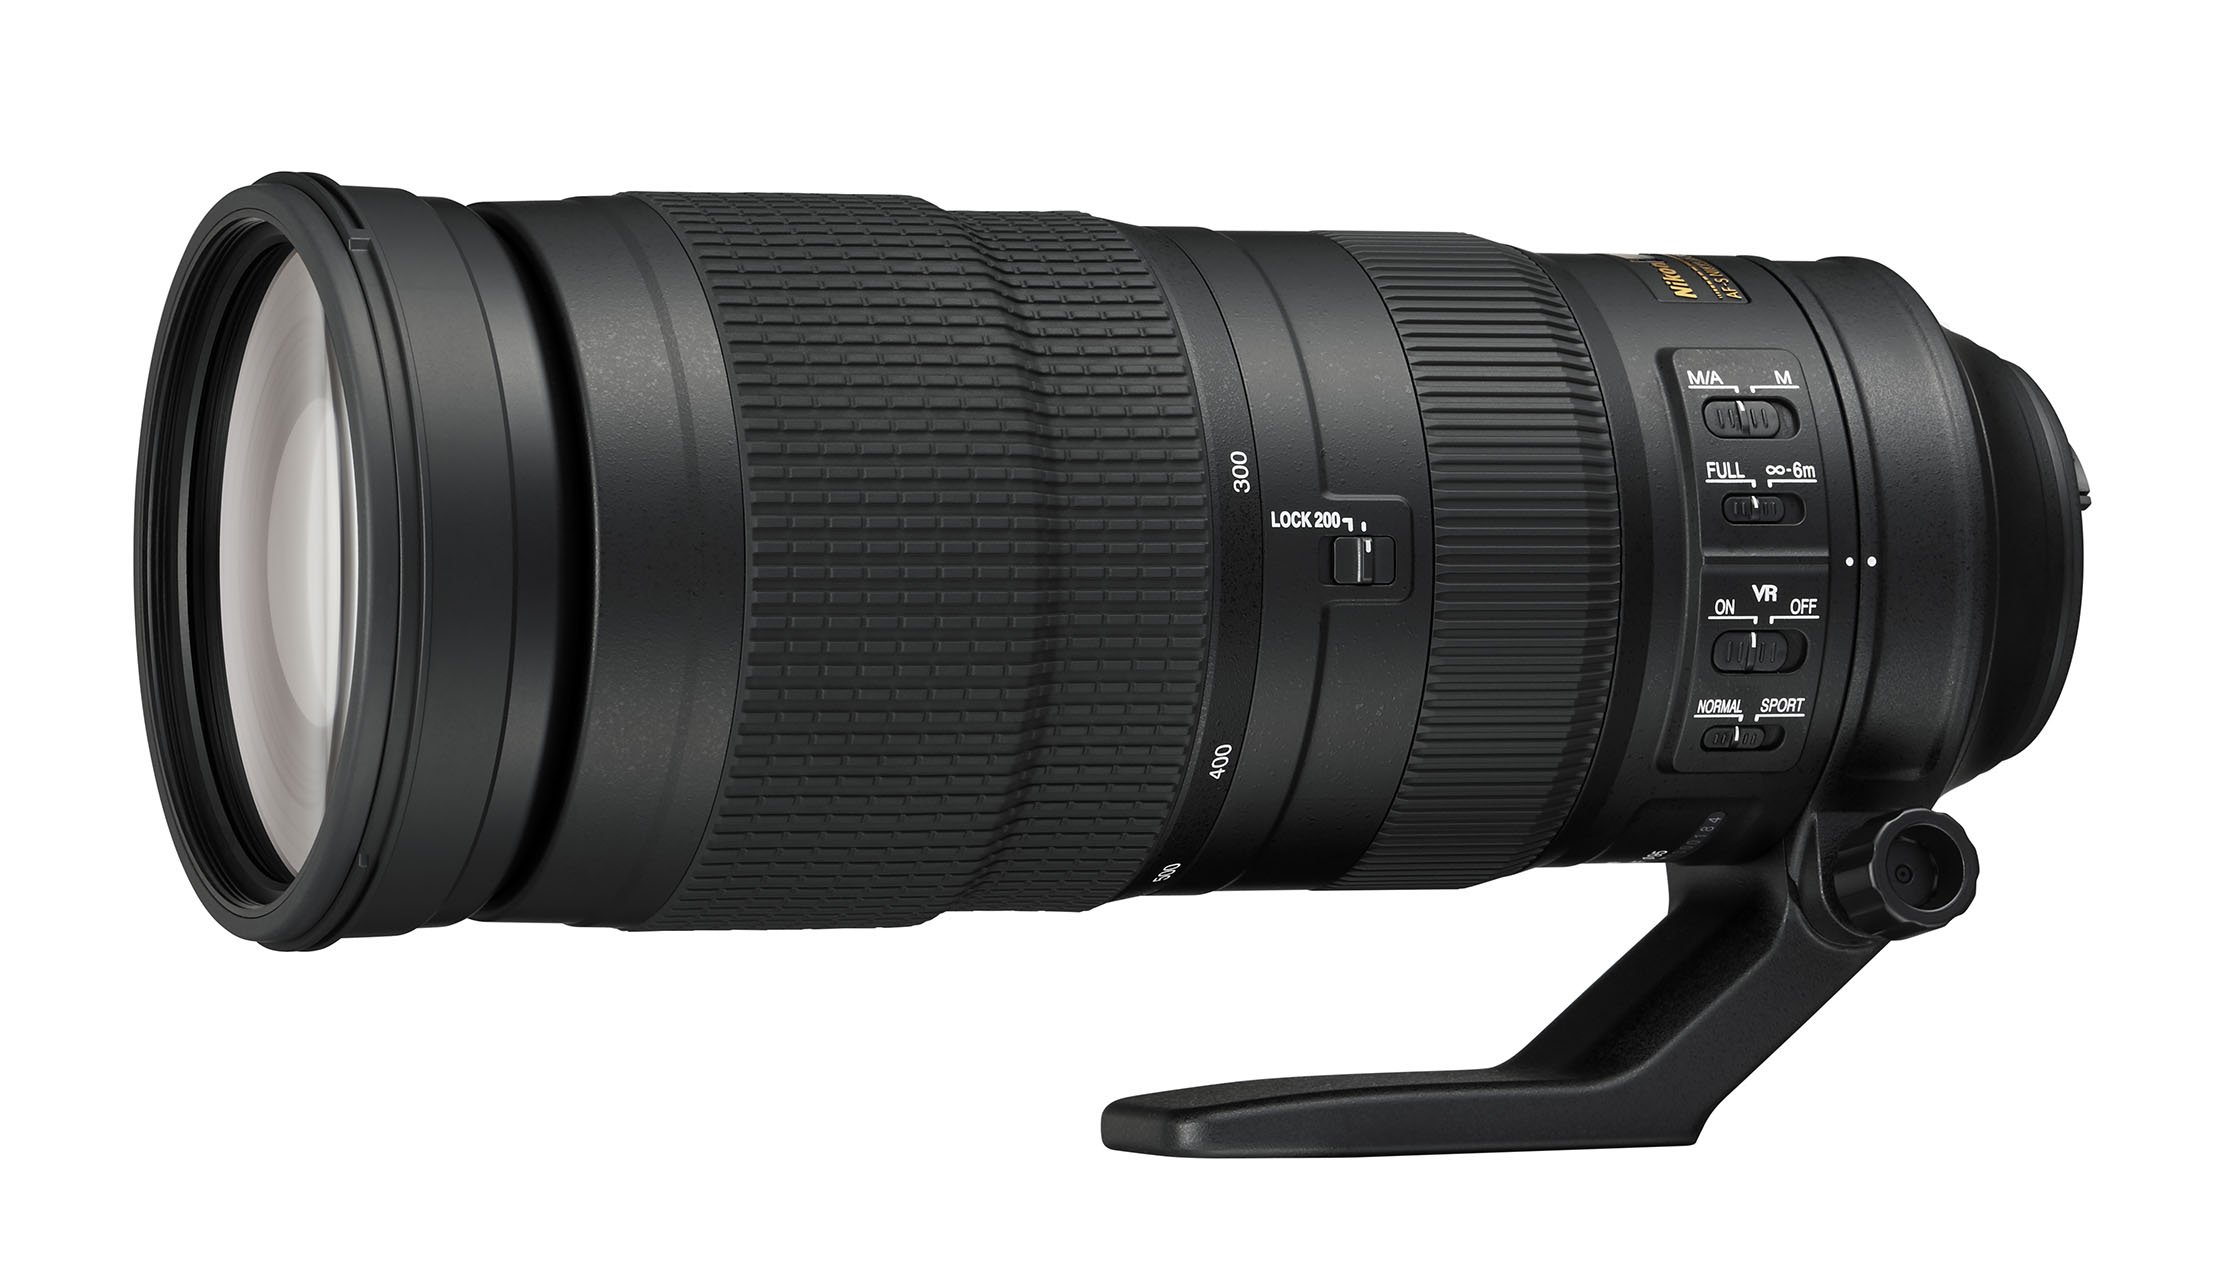 Nikon AF-S FX NIKKOR 200-500mm f/5.6E ED Vibration Reduction Zoom Lens with Auto Focus for Nikon DSLR Cameras Bundle with Lowepro Lens Case 13 x 32 cm (Black)